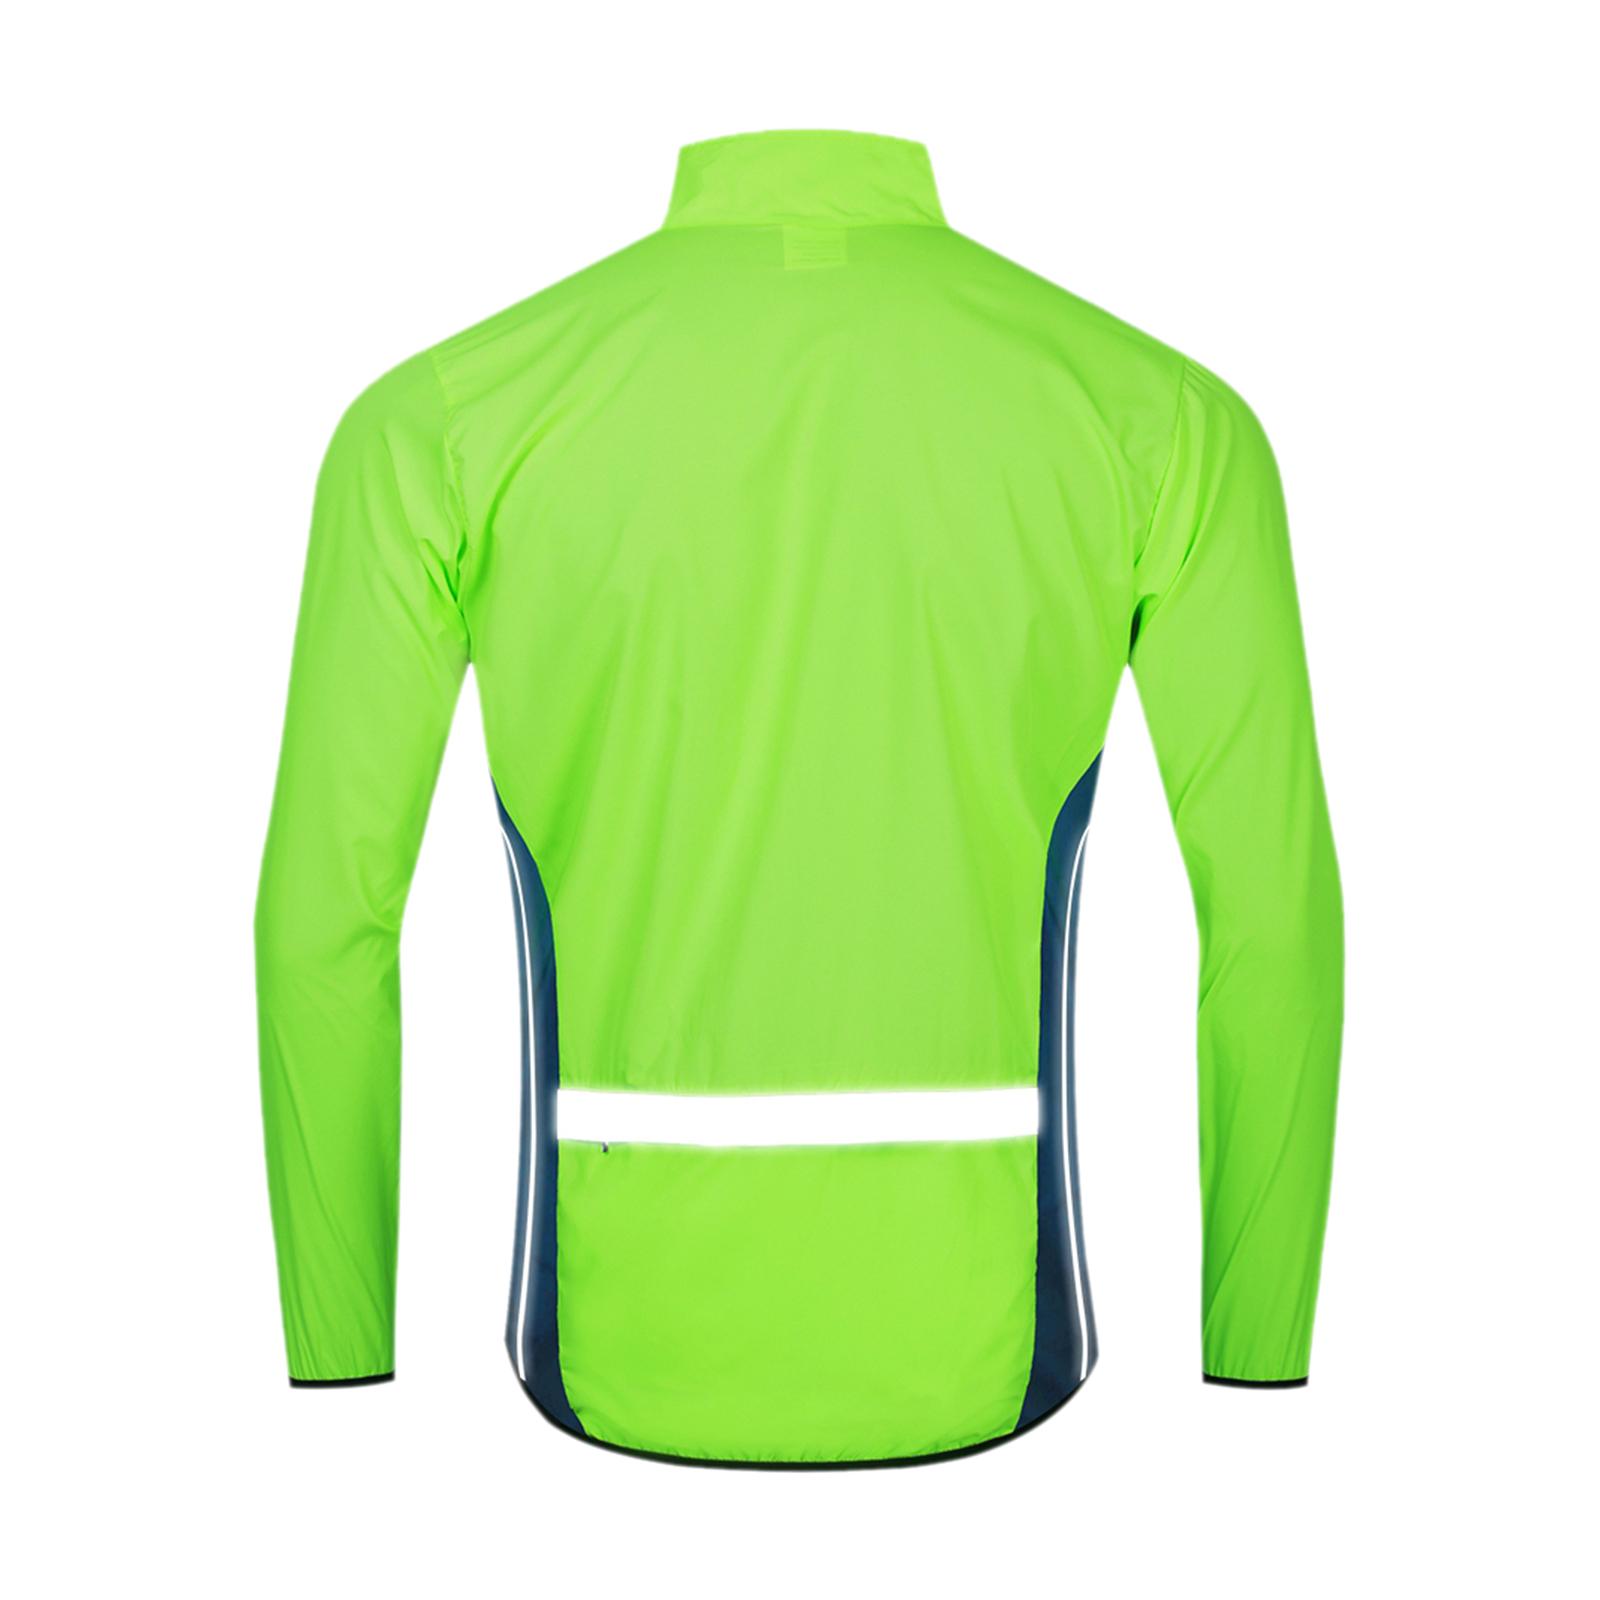 Cycling Mens Reflective Jacket Rain Coat Breathable Navy Green XXXL